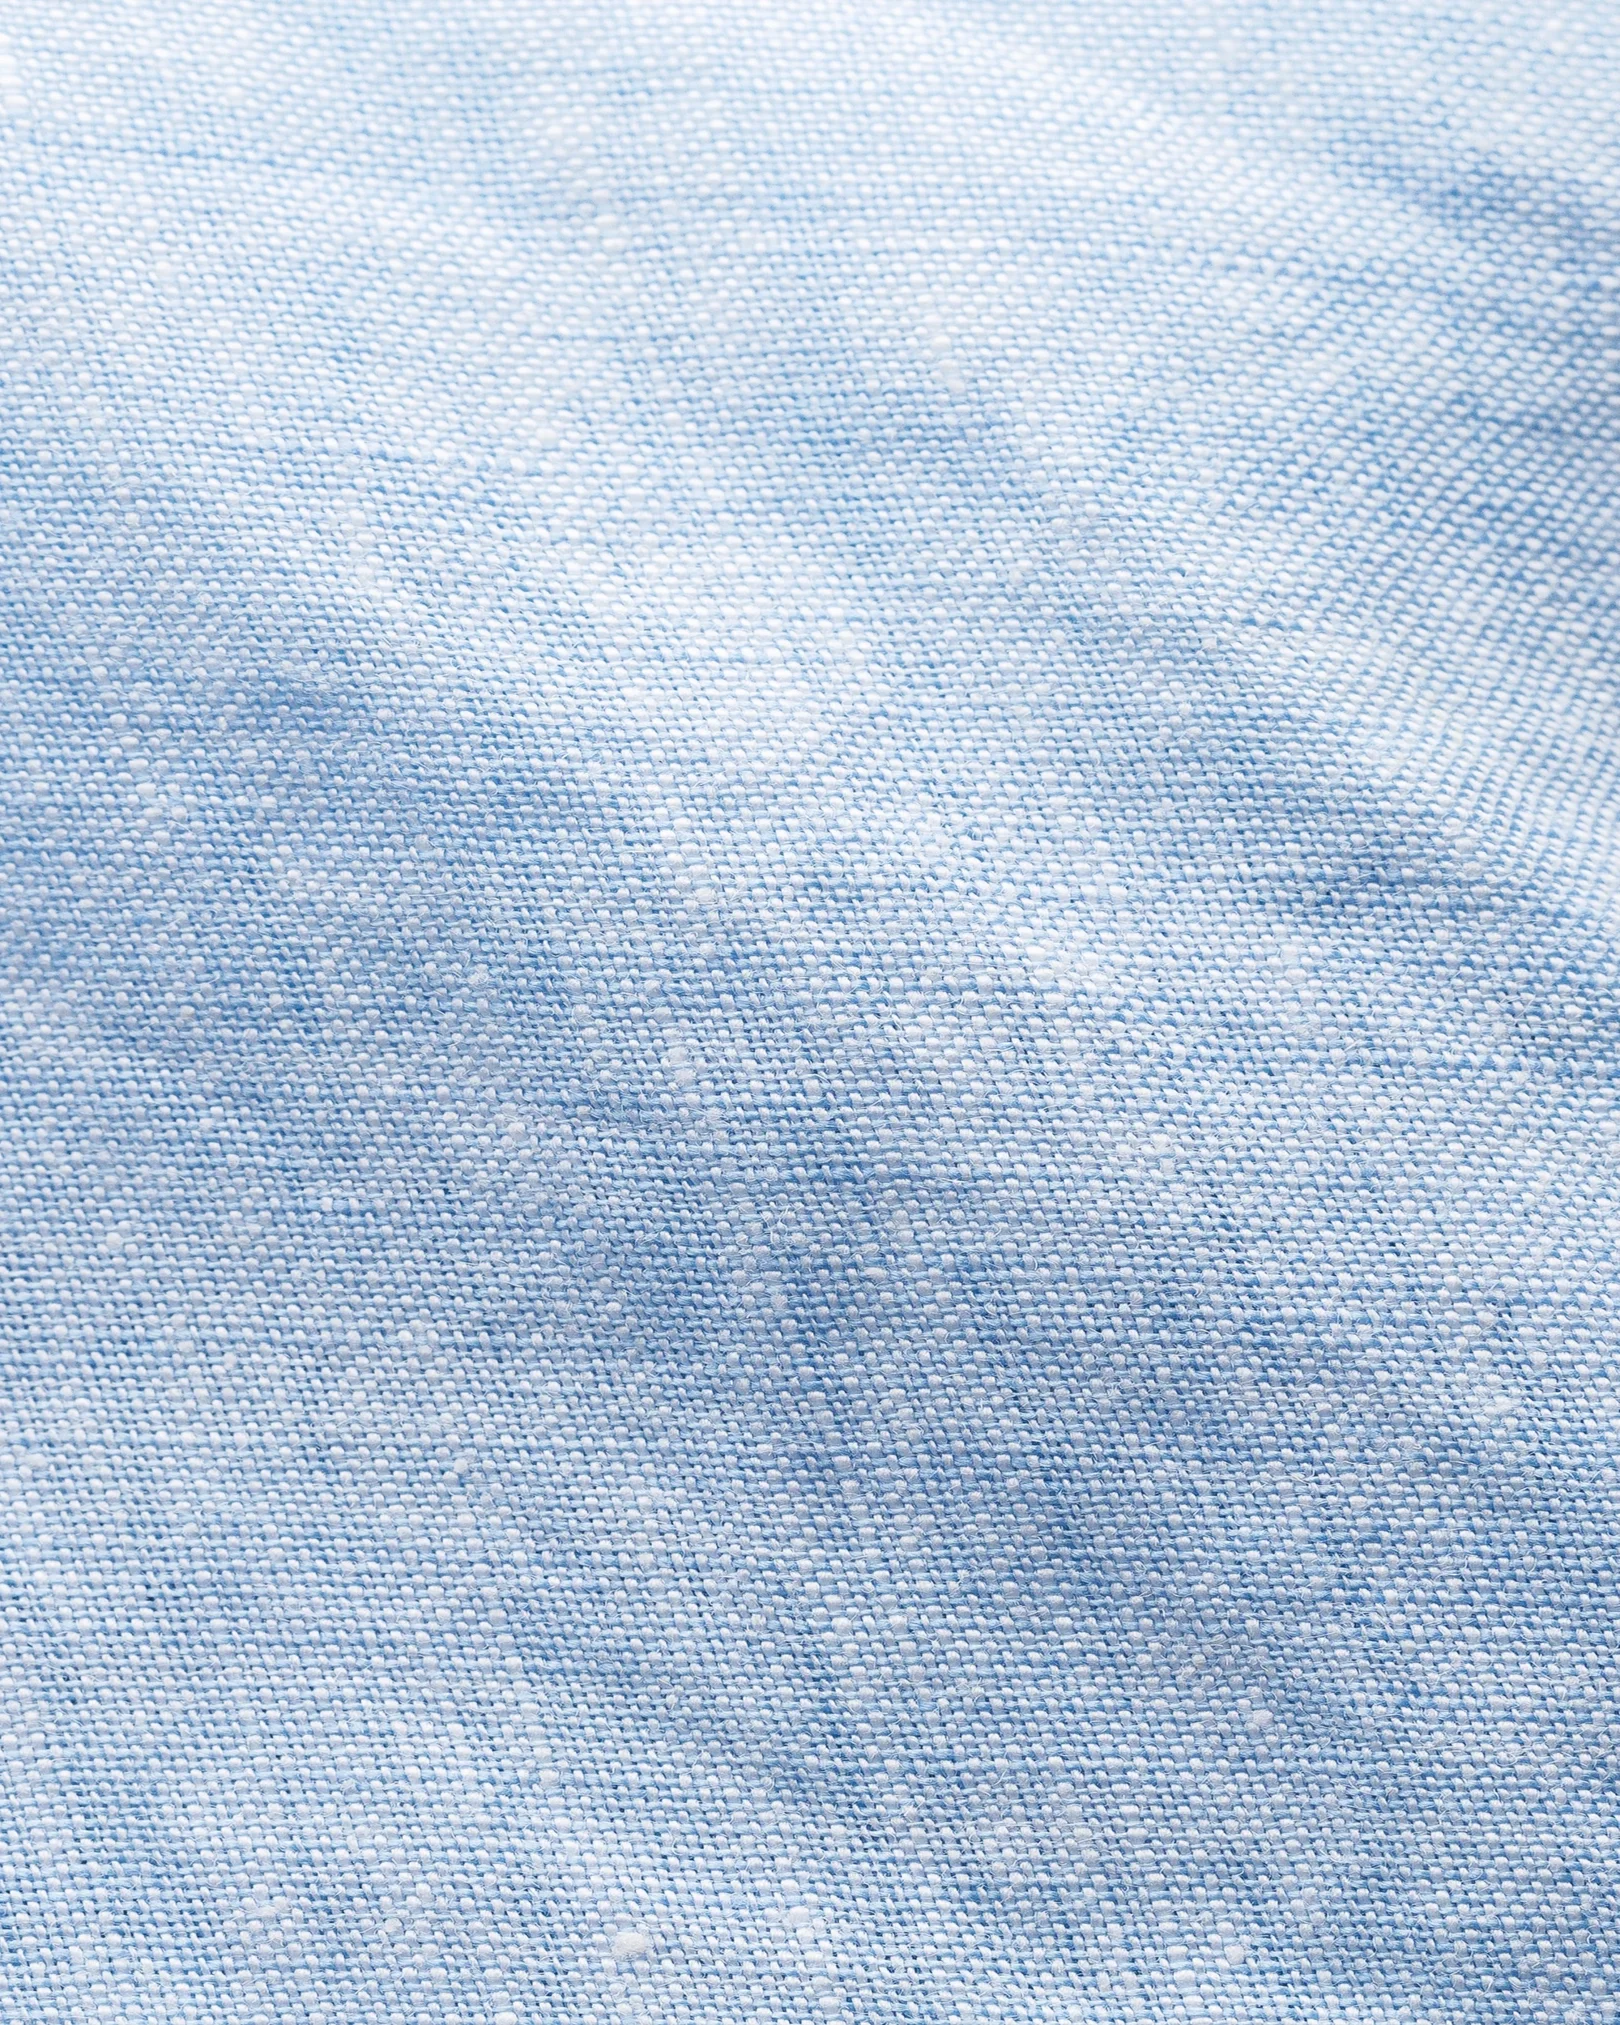 Eton - blue linen extreme cut away shirt